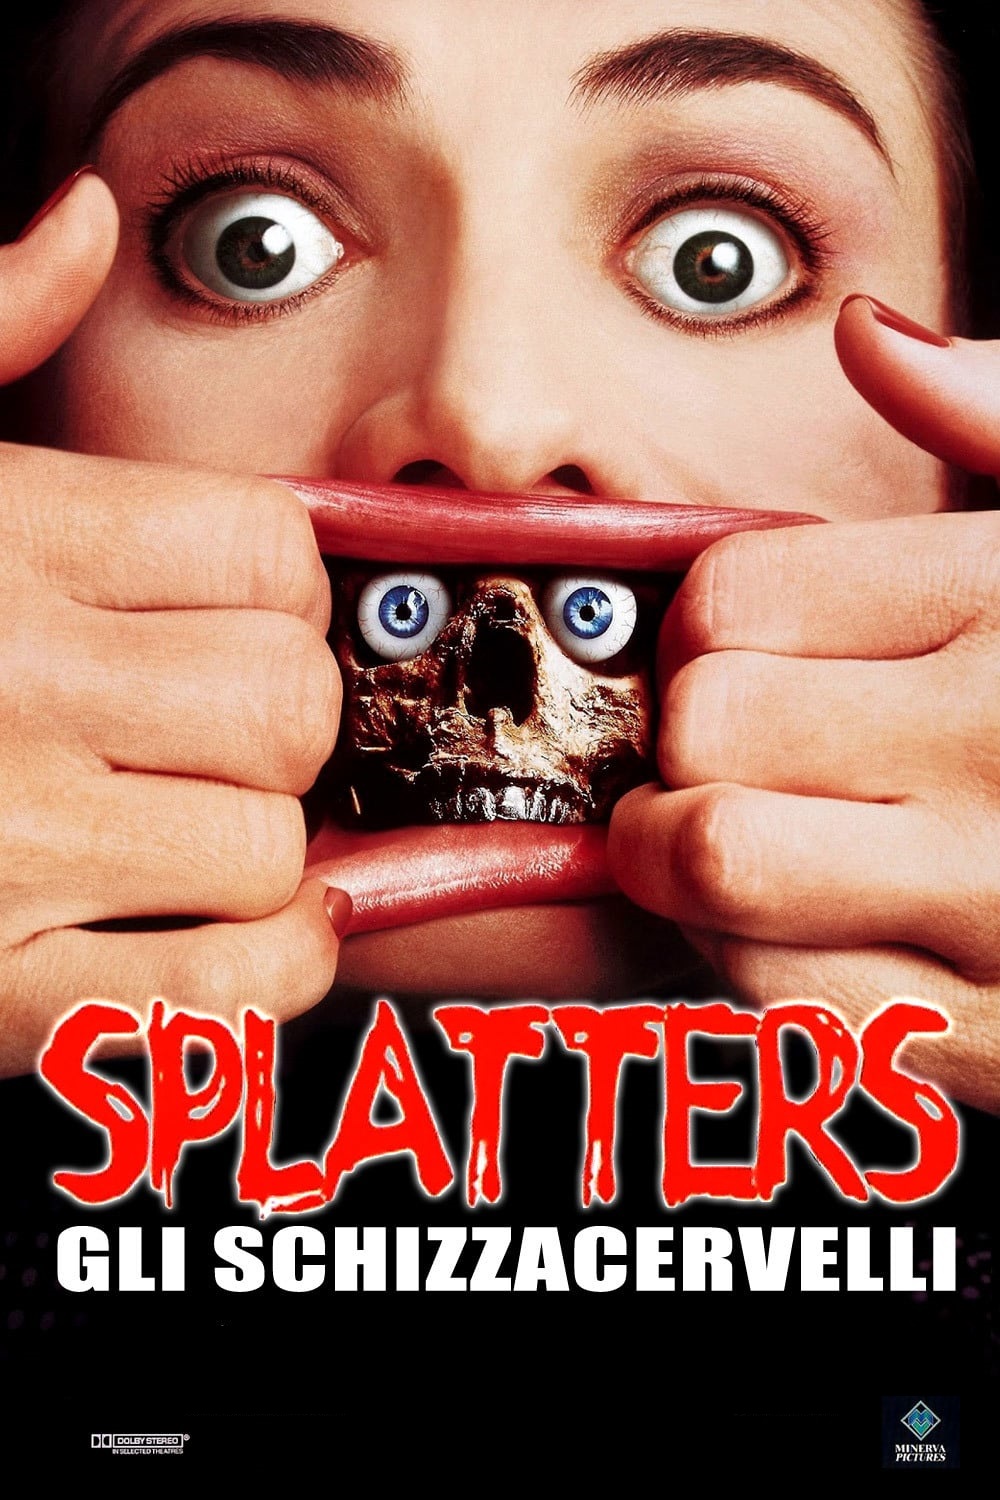 Splatters – Gli schizzacervelli [HD] (1991)